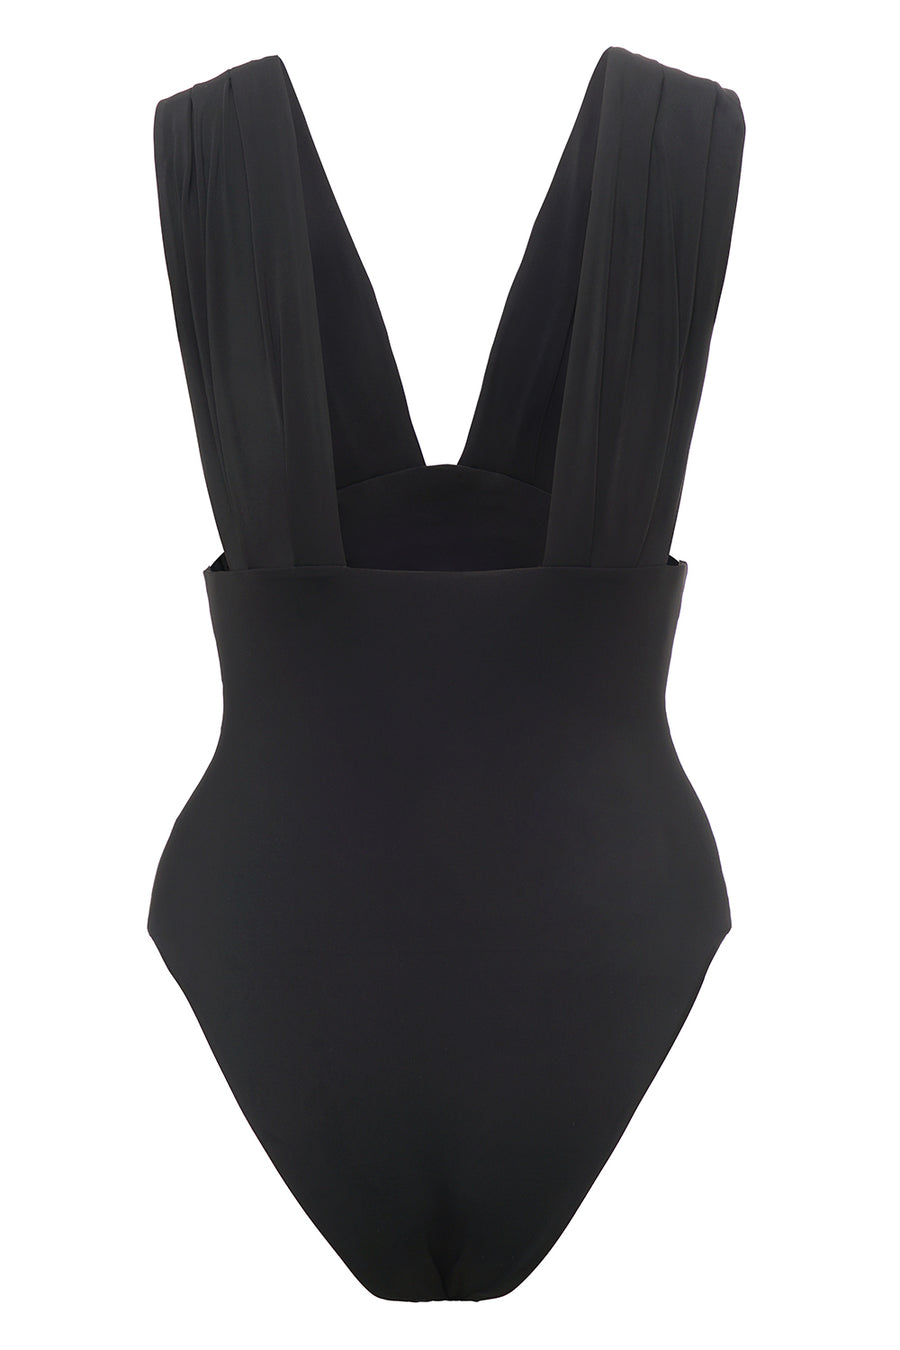 Swimsuits for Women | Swimwear and Beachwear | Affordable 2021 Bikinis ...